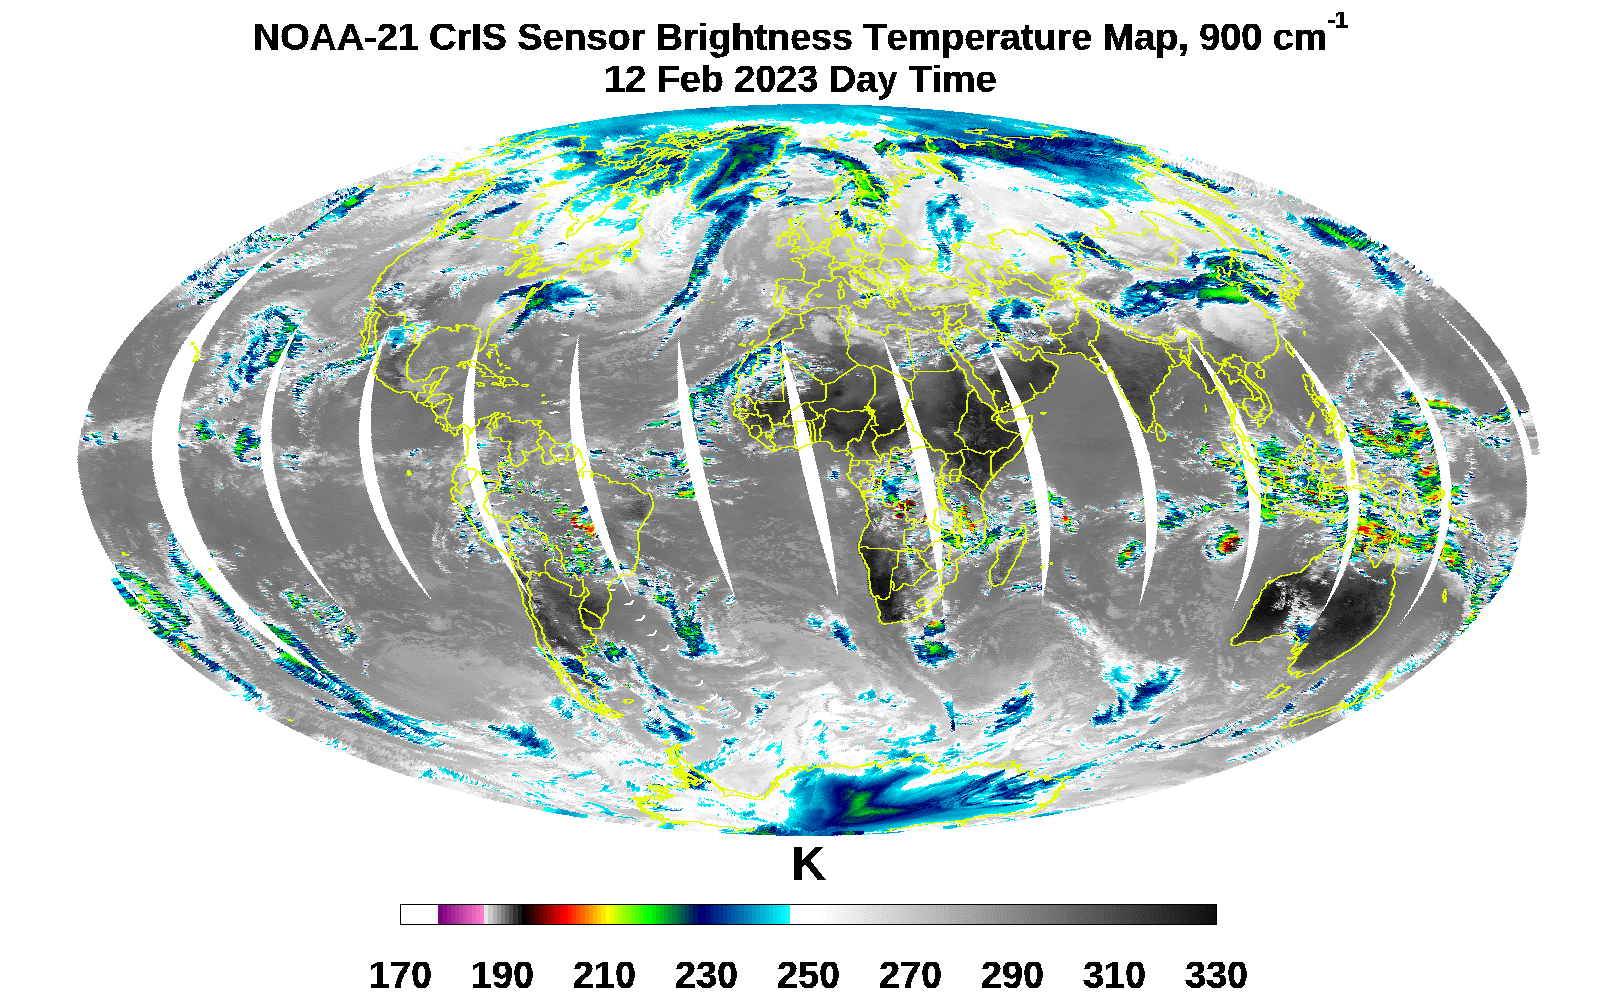 NOAA-21 CrIS First Light Image, 12 February 2023